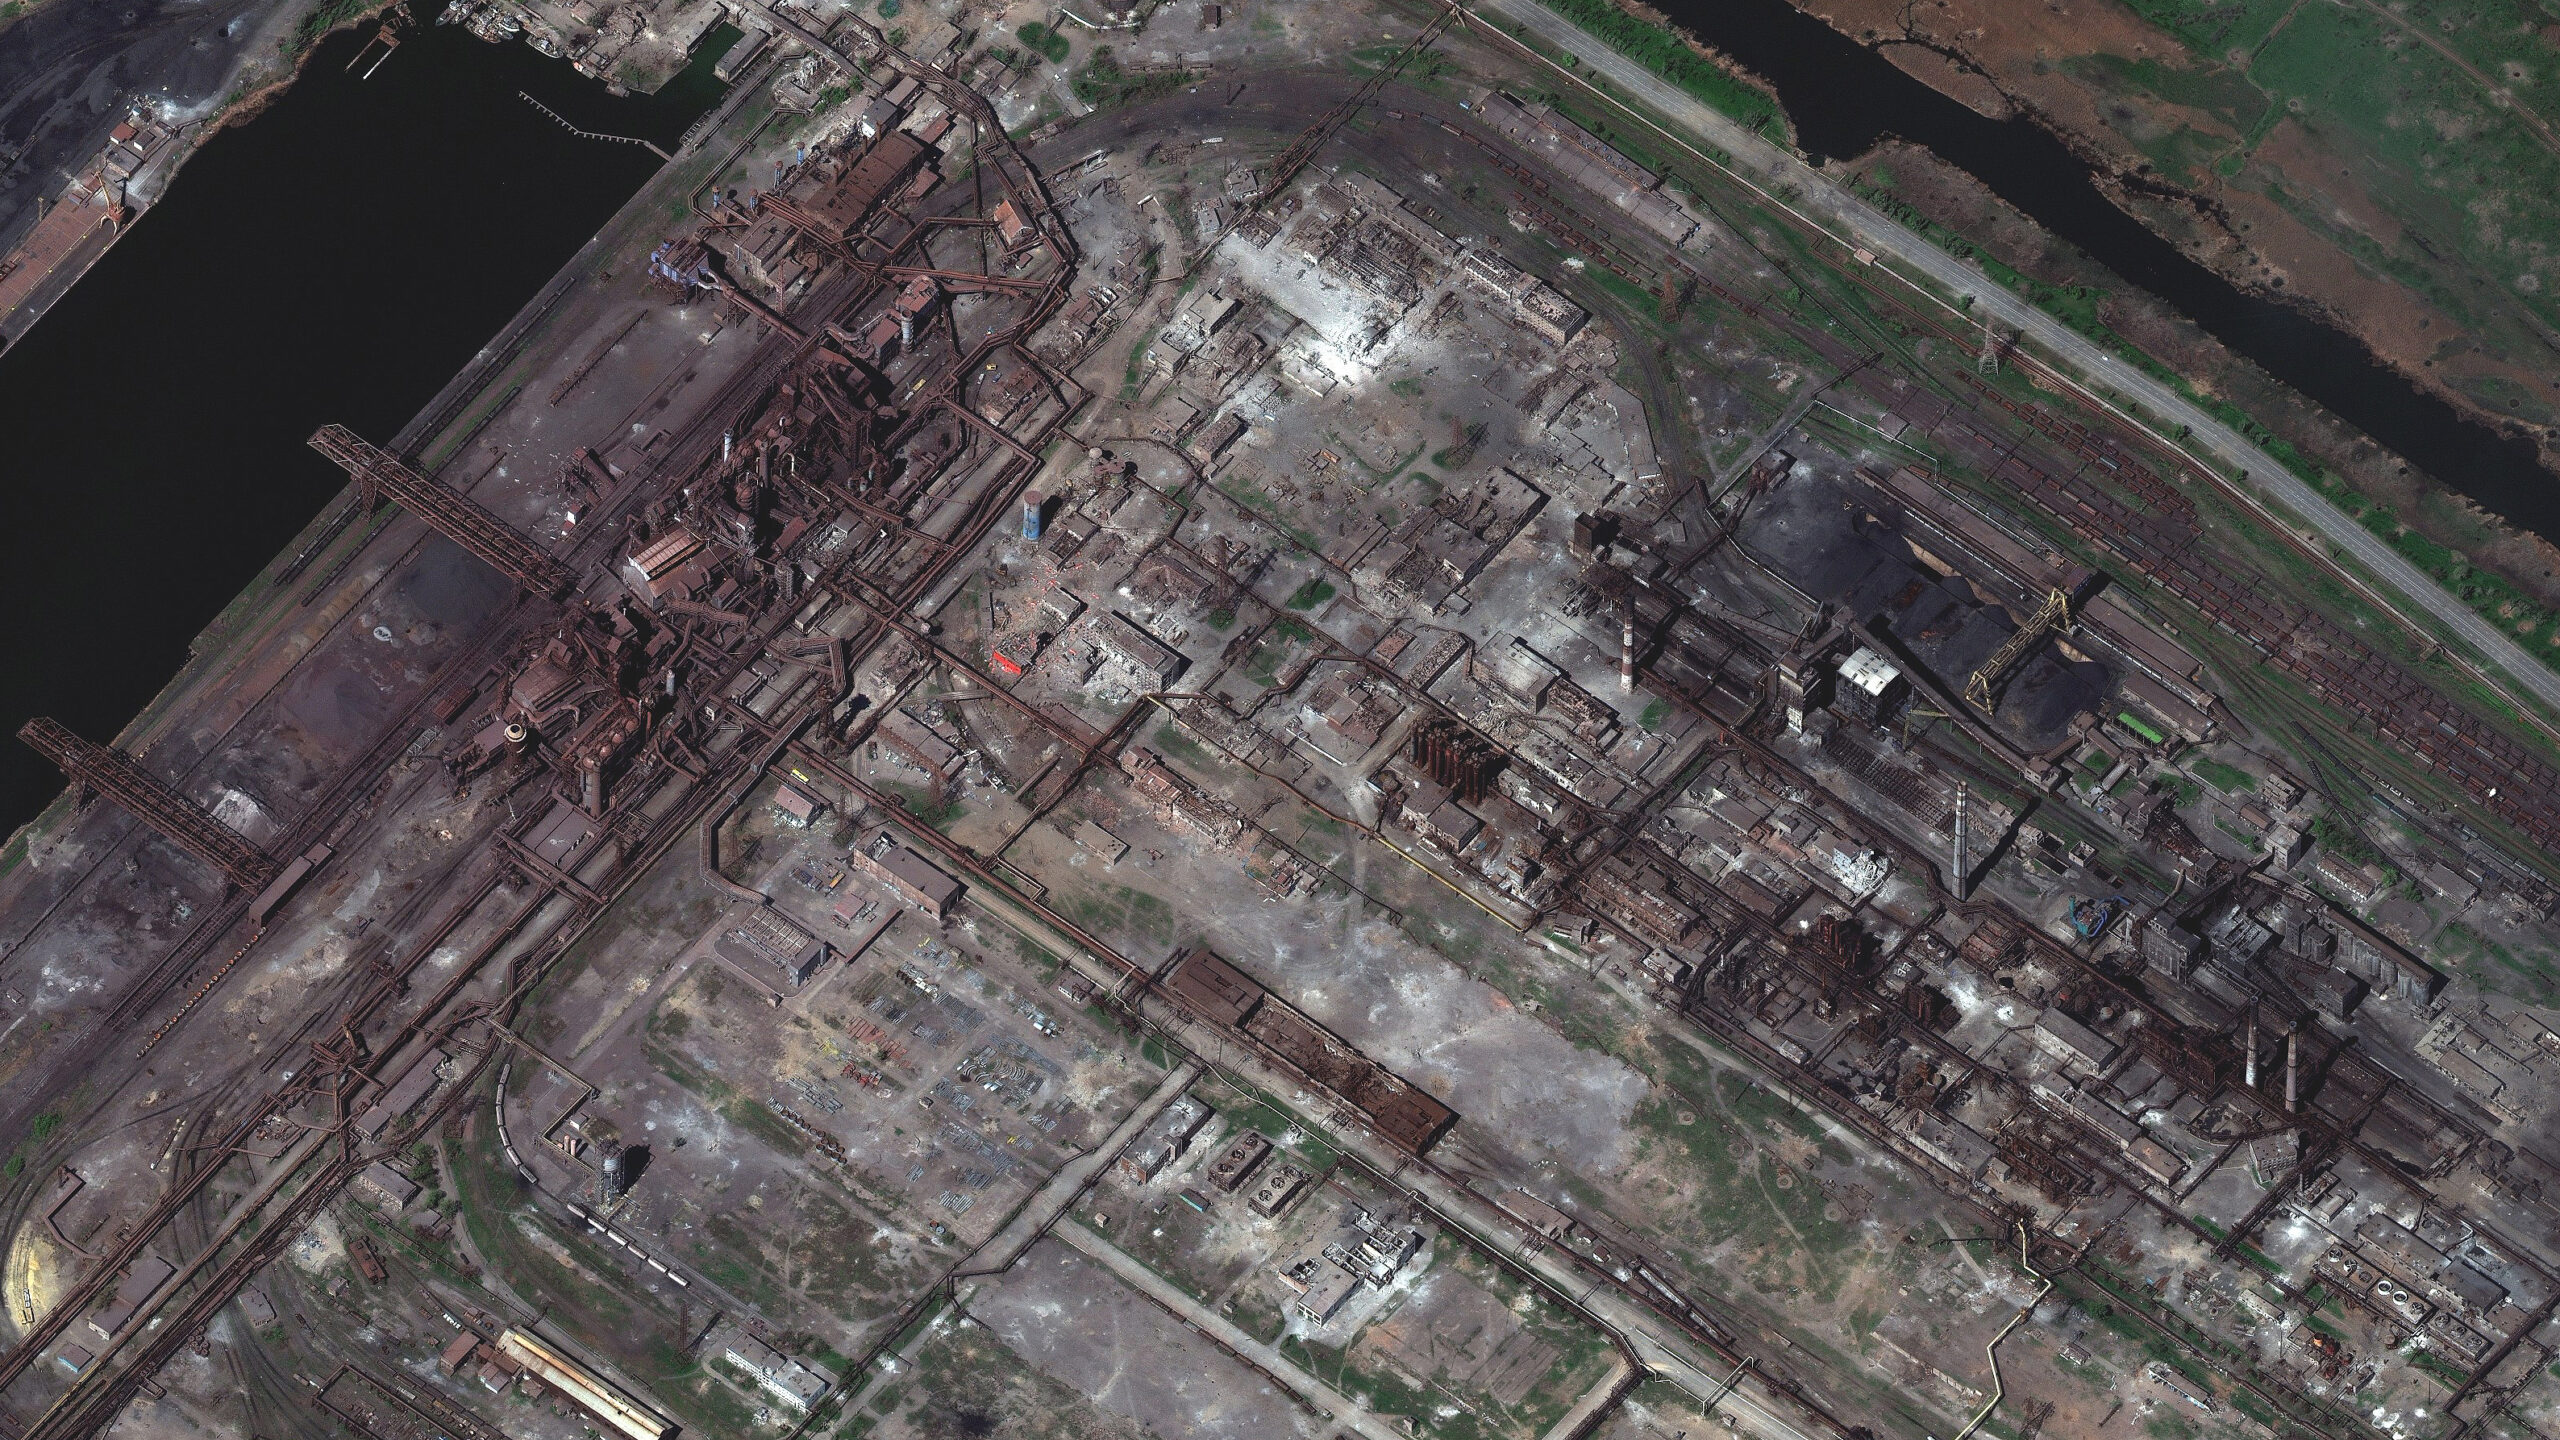 01_large-1overview-of-azovstal-steel-plant_mariupol-ukraine_29april2022_wv3-copy-1-scaled.jpg